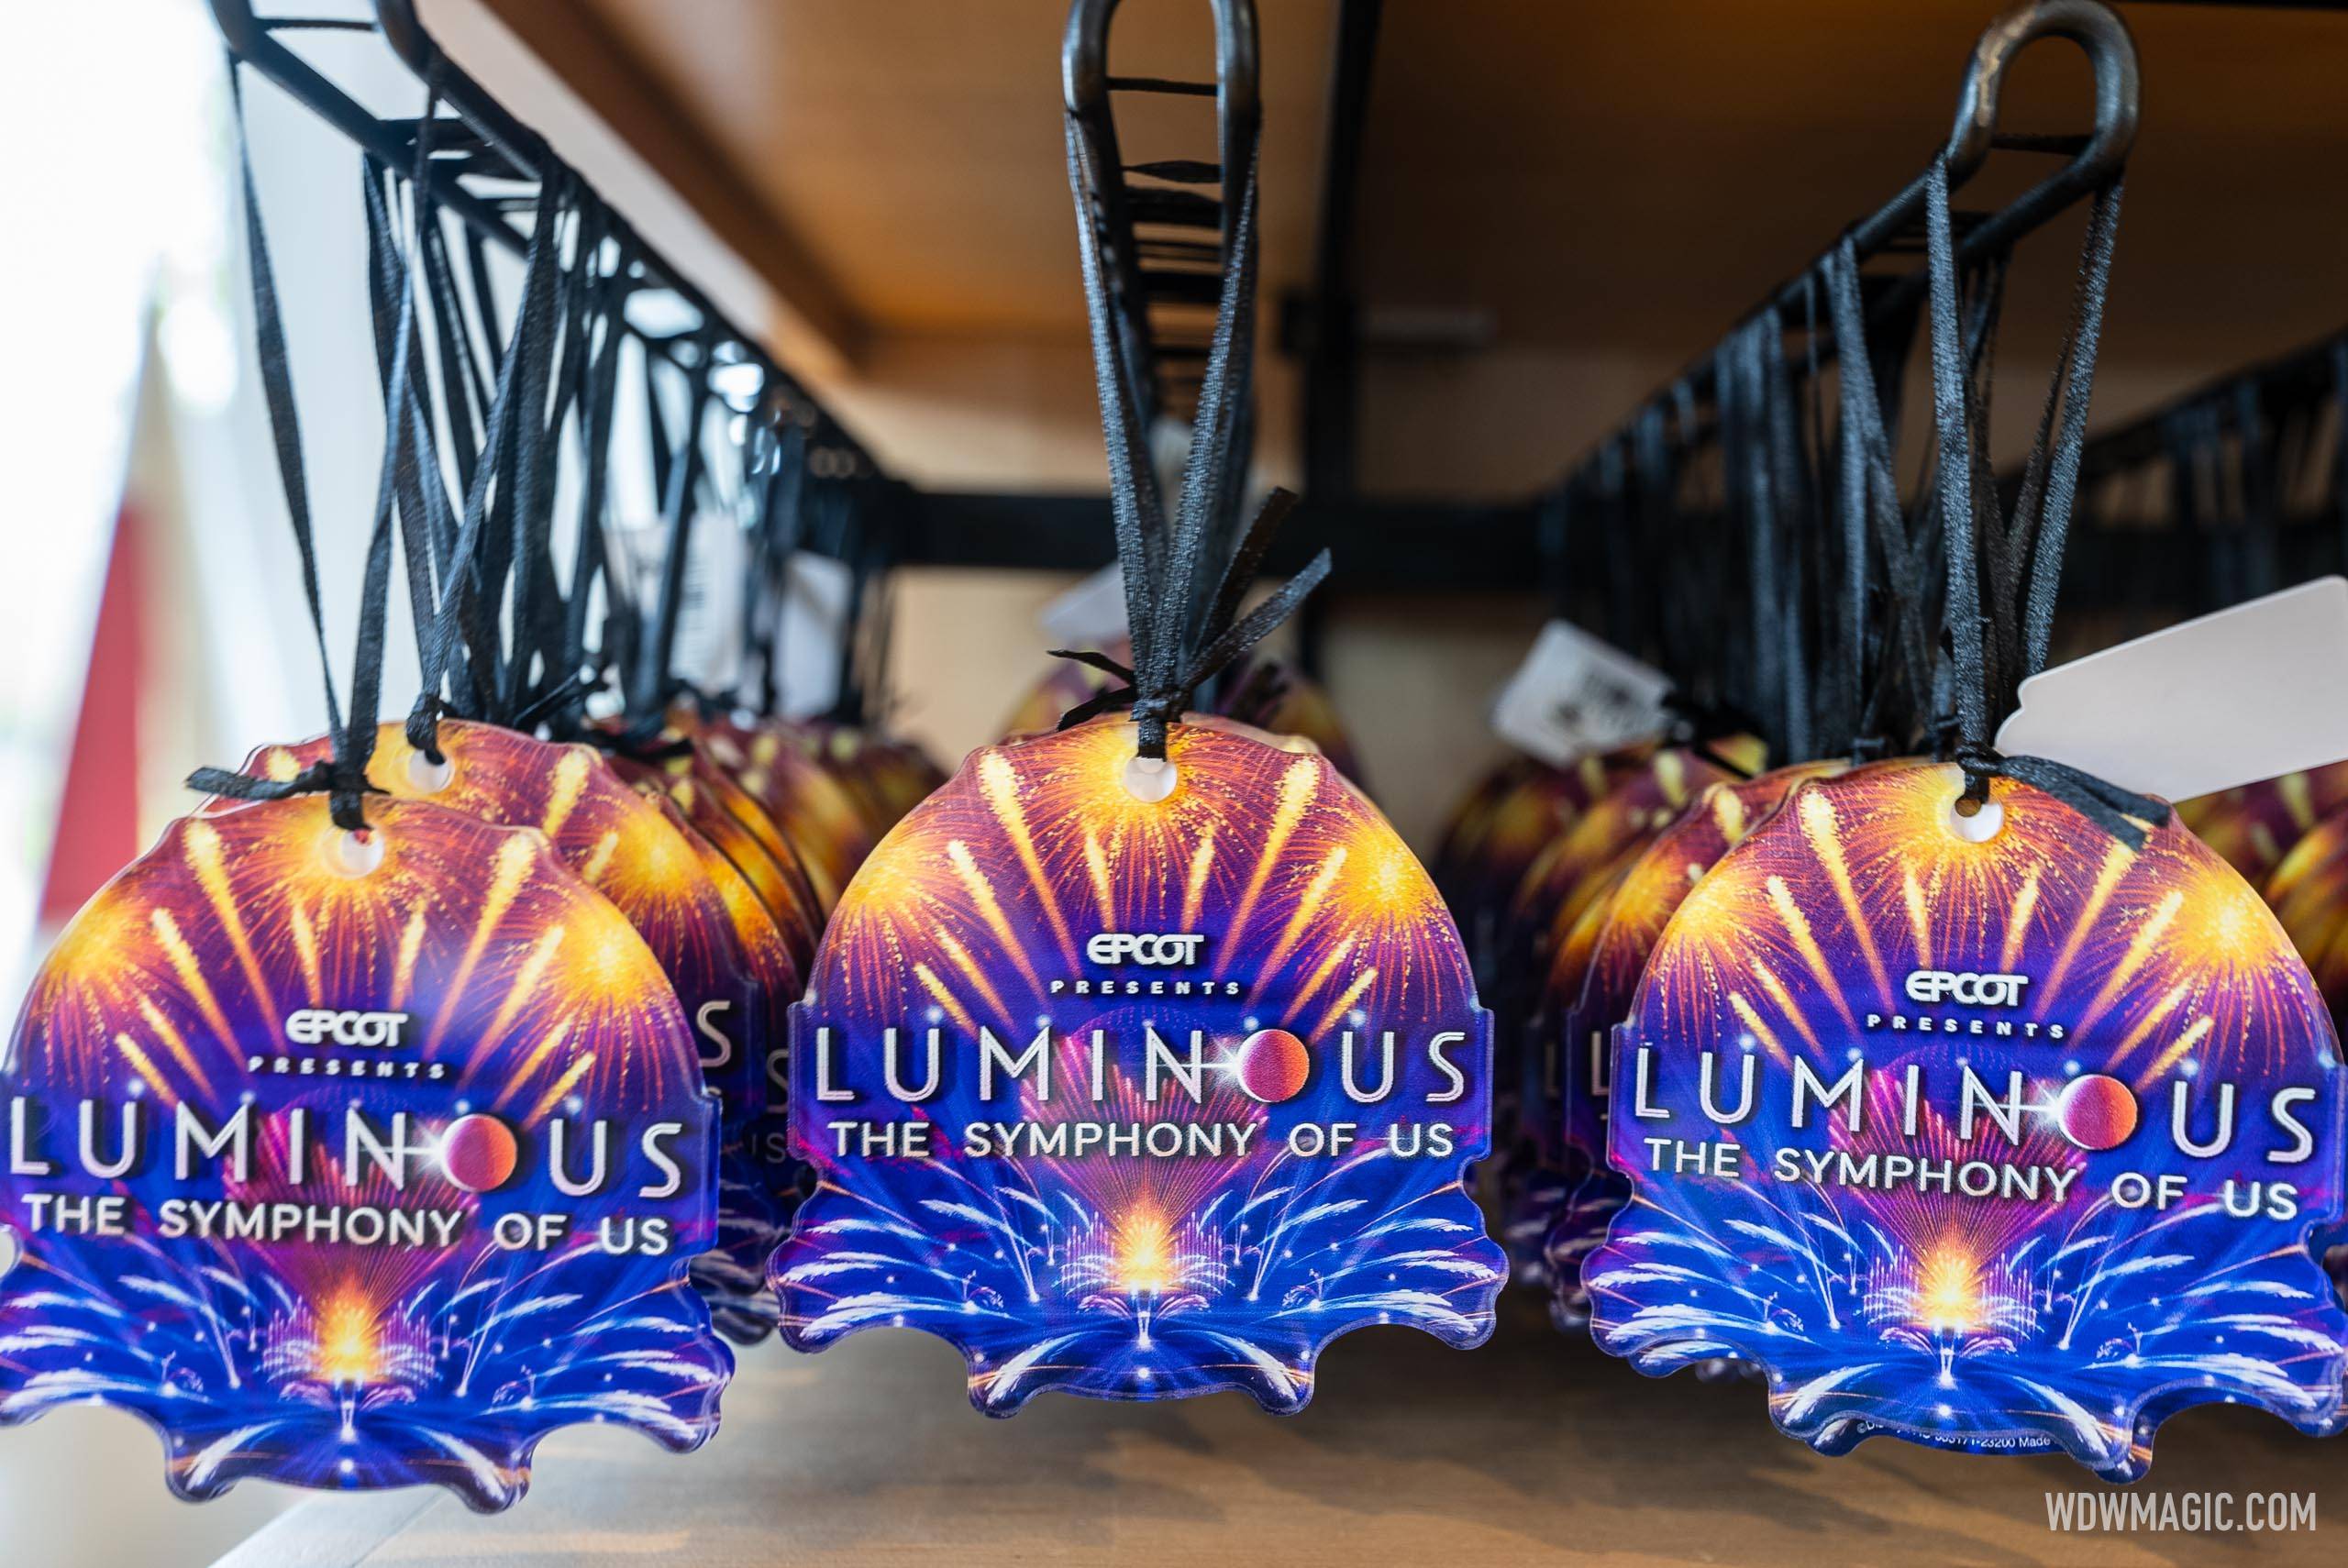 Luminous the Symphony of Us merchandise